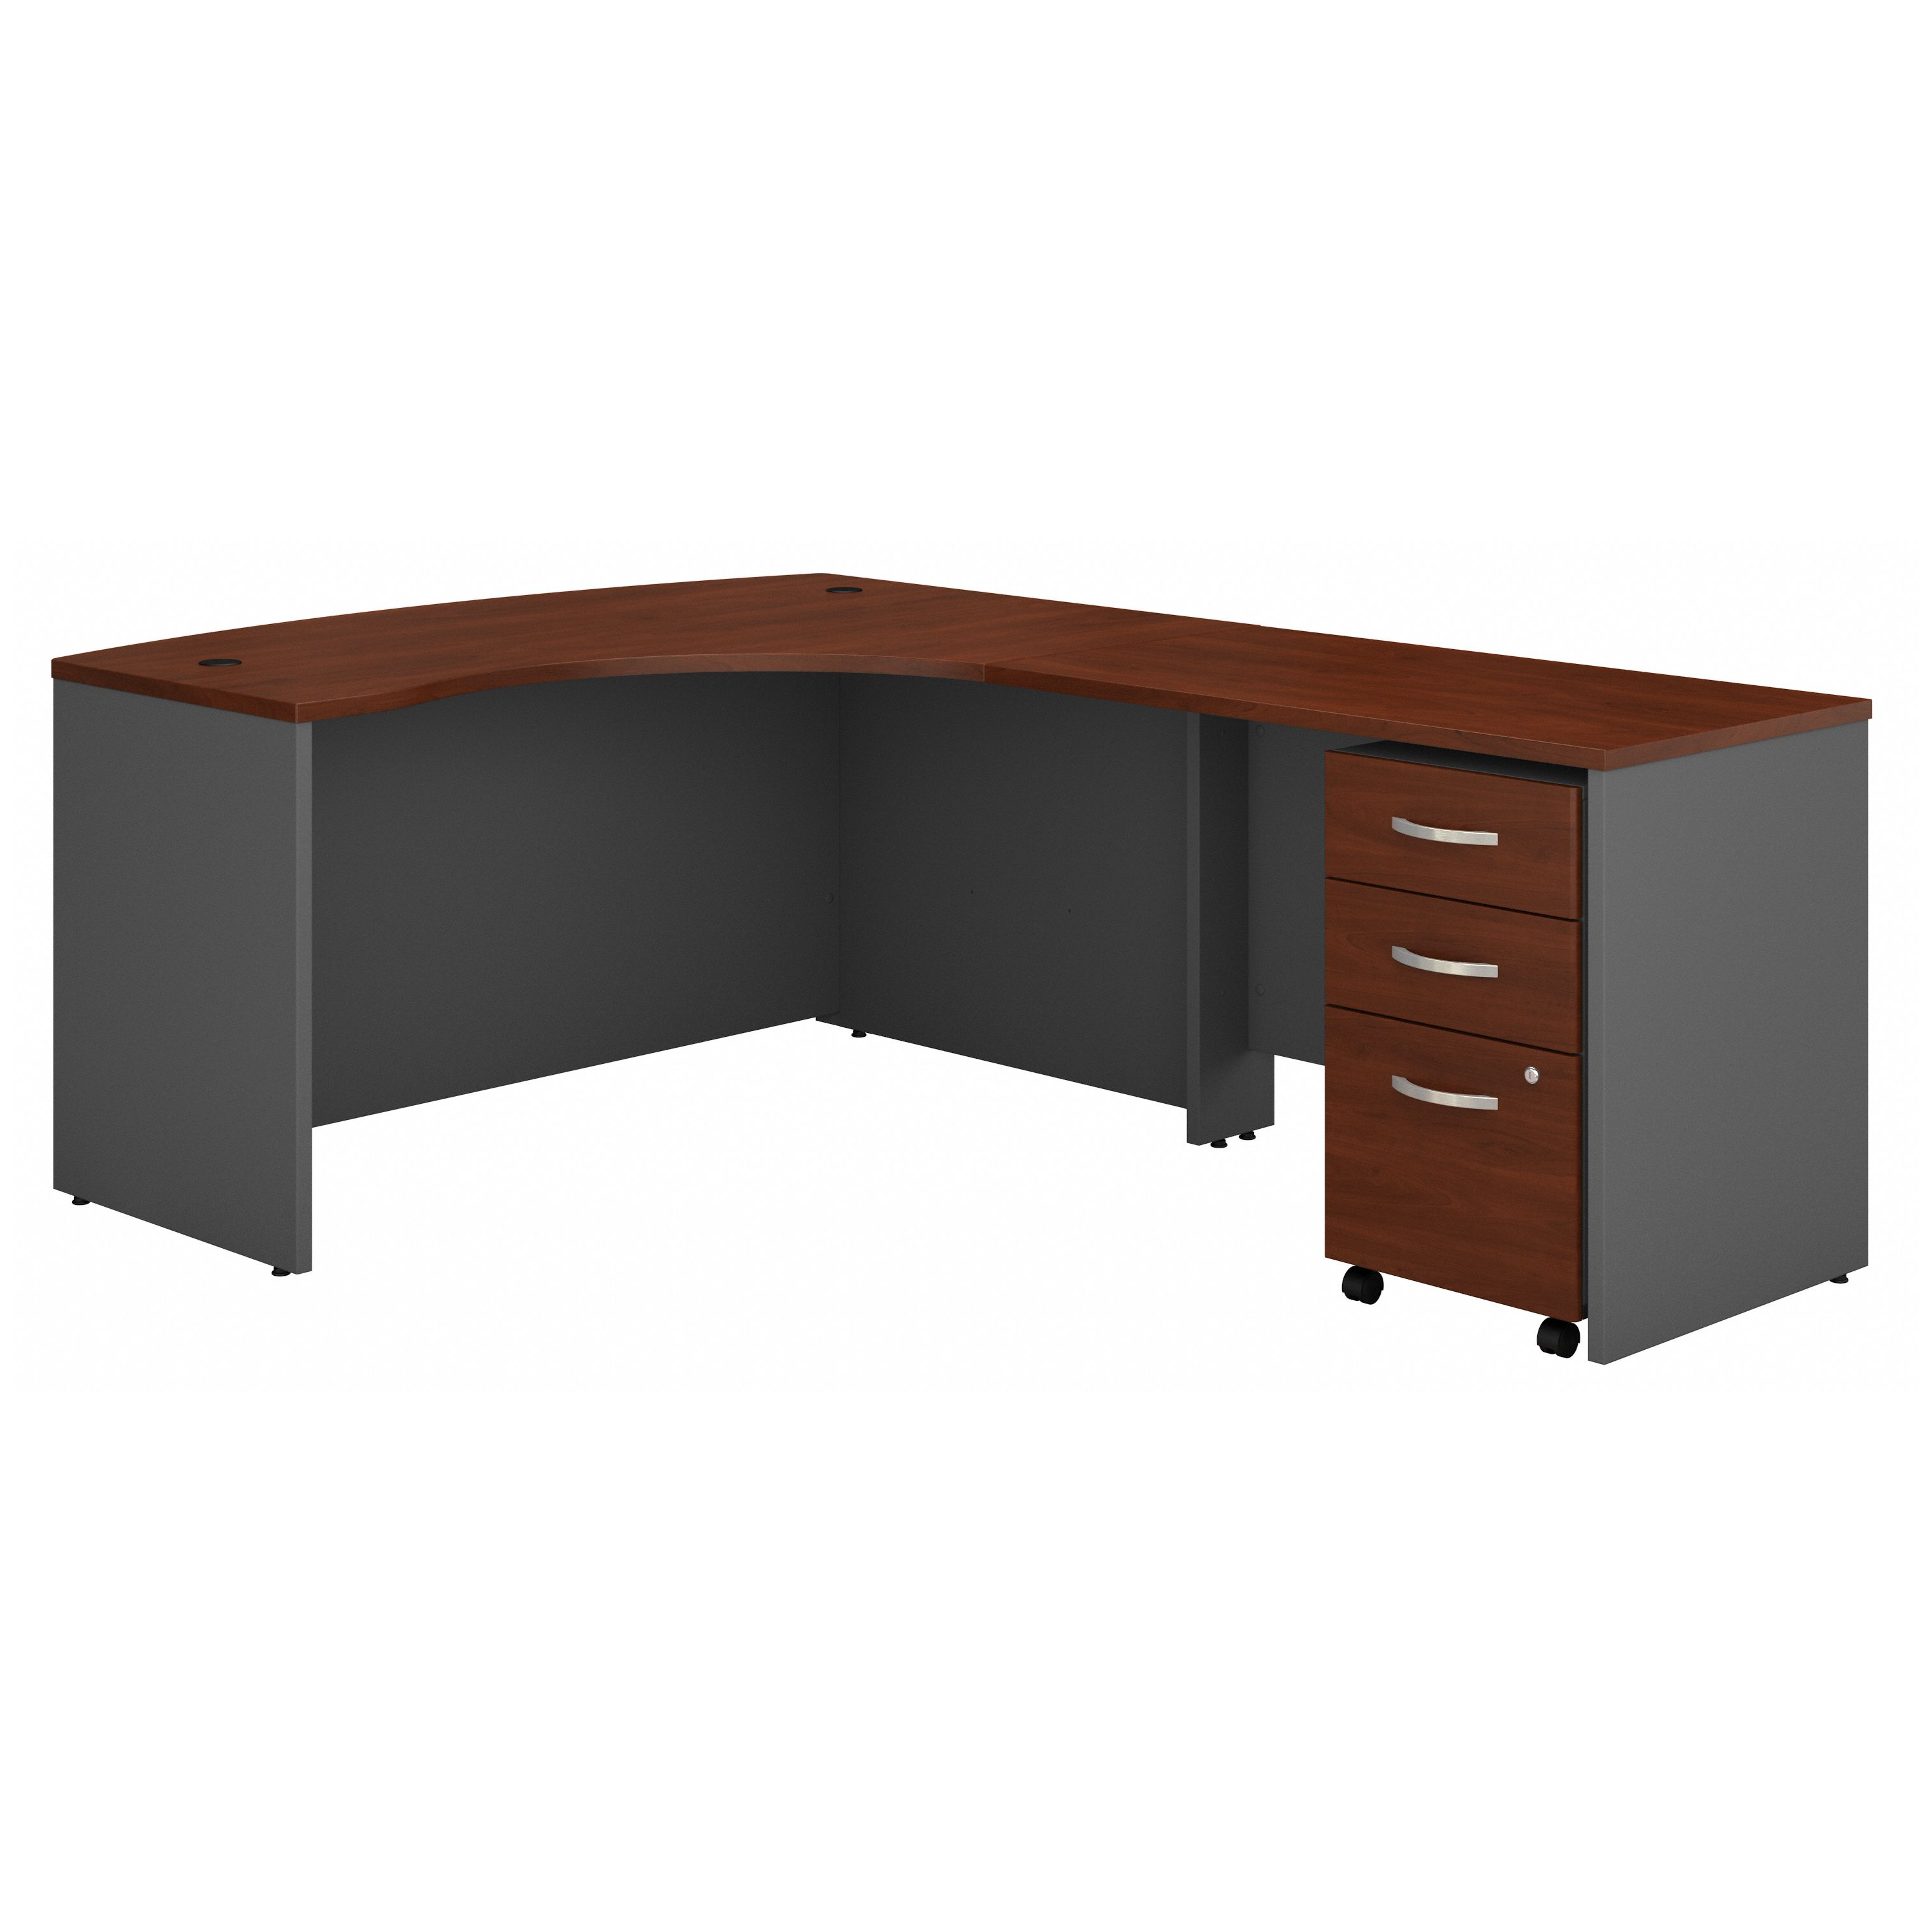 Shop Bush Business Furniture Series C Right Handed L Shaped Desk with Mobile File Cabinet 02 SRC007HCRSU #color_hansen cherry/graphite gray